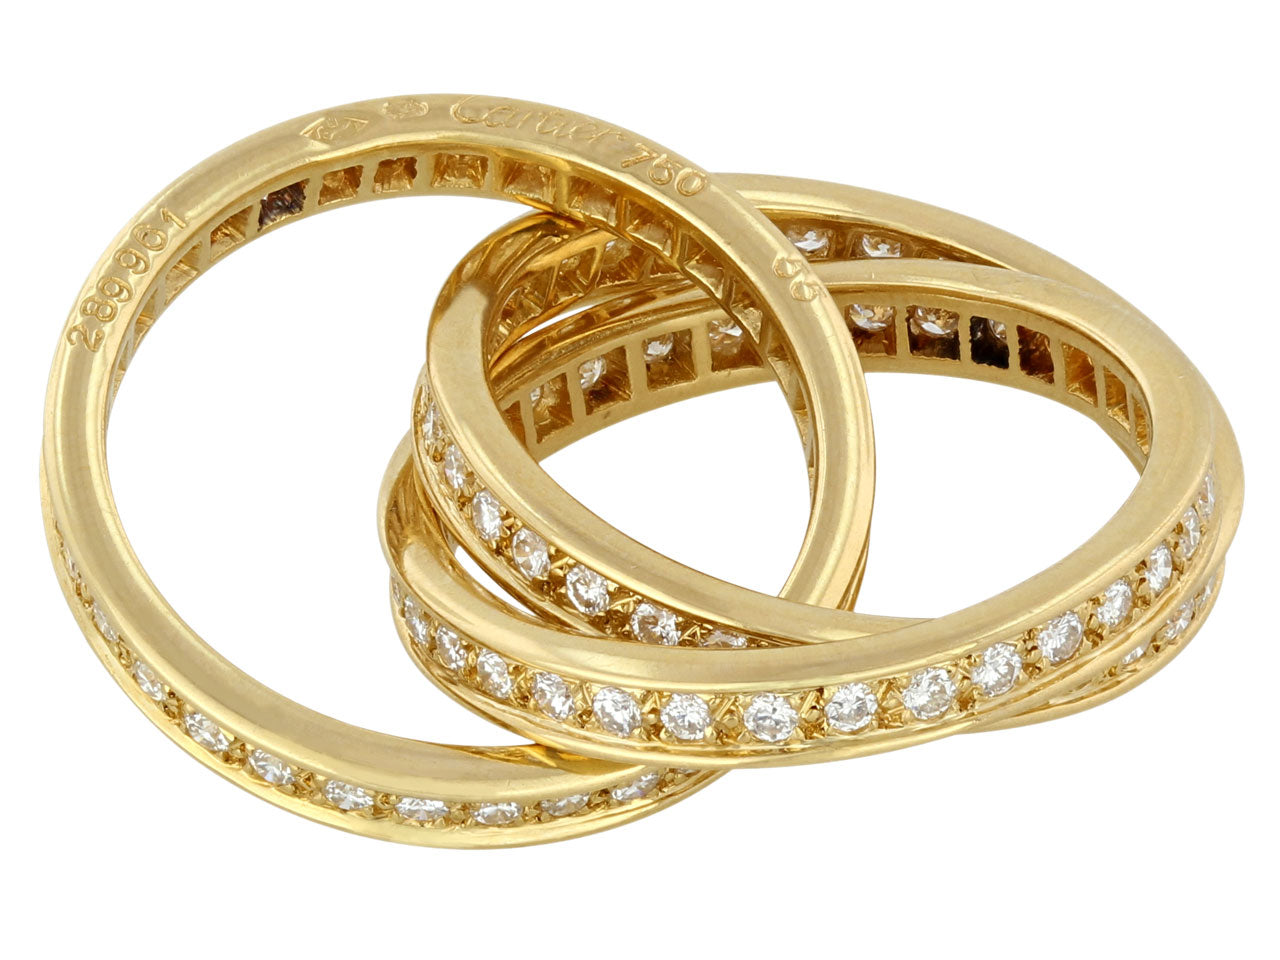 CRB4211800 - Juste un Clou ring - Yellow gold, diamonds - Cartier